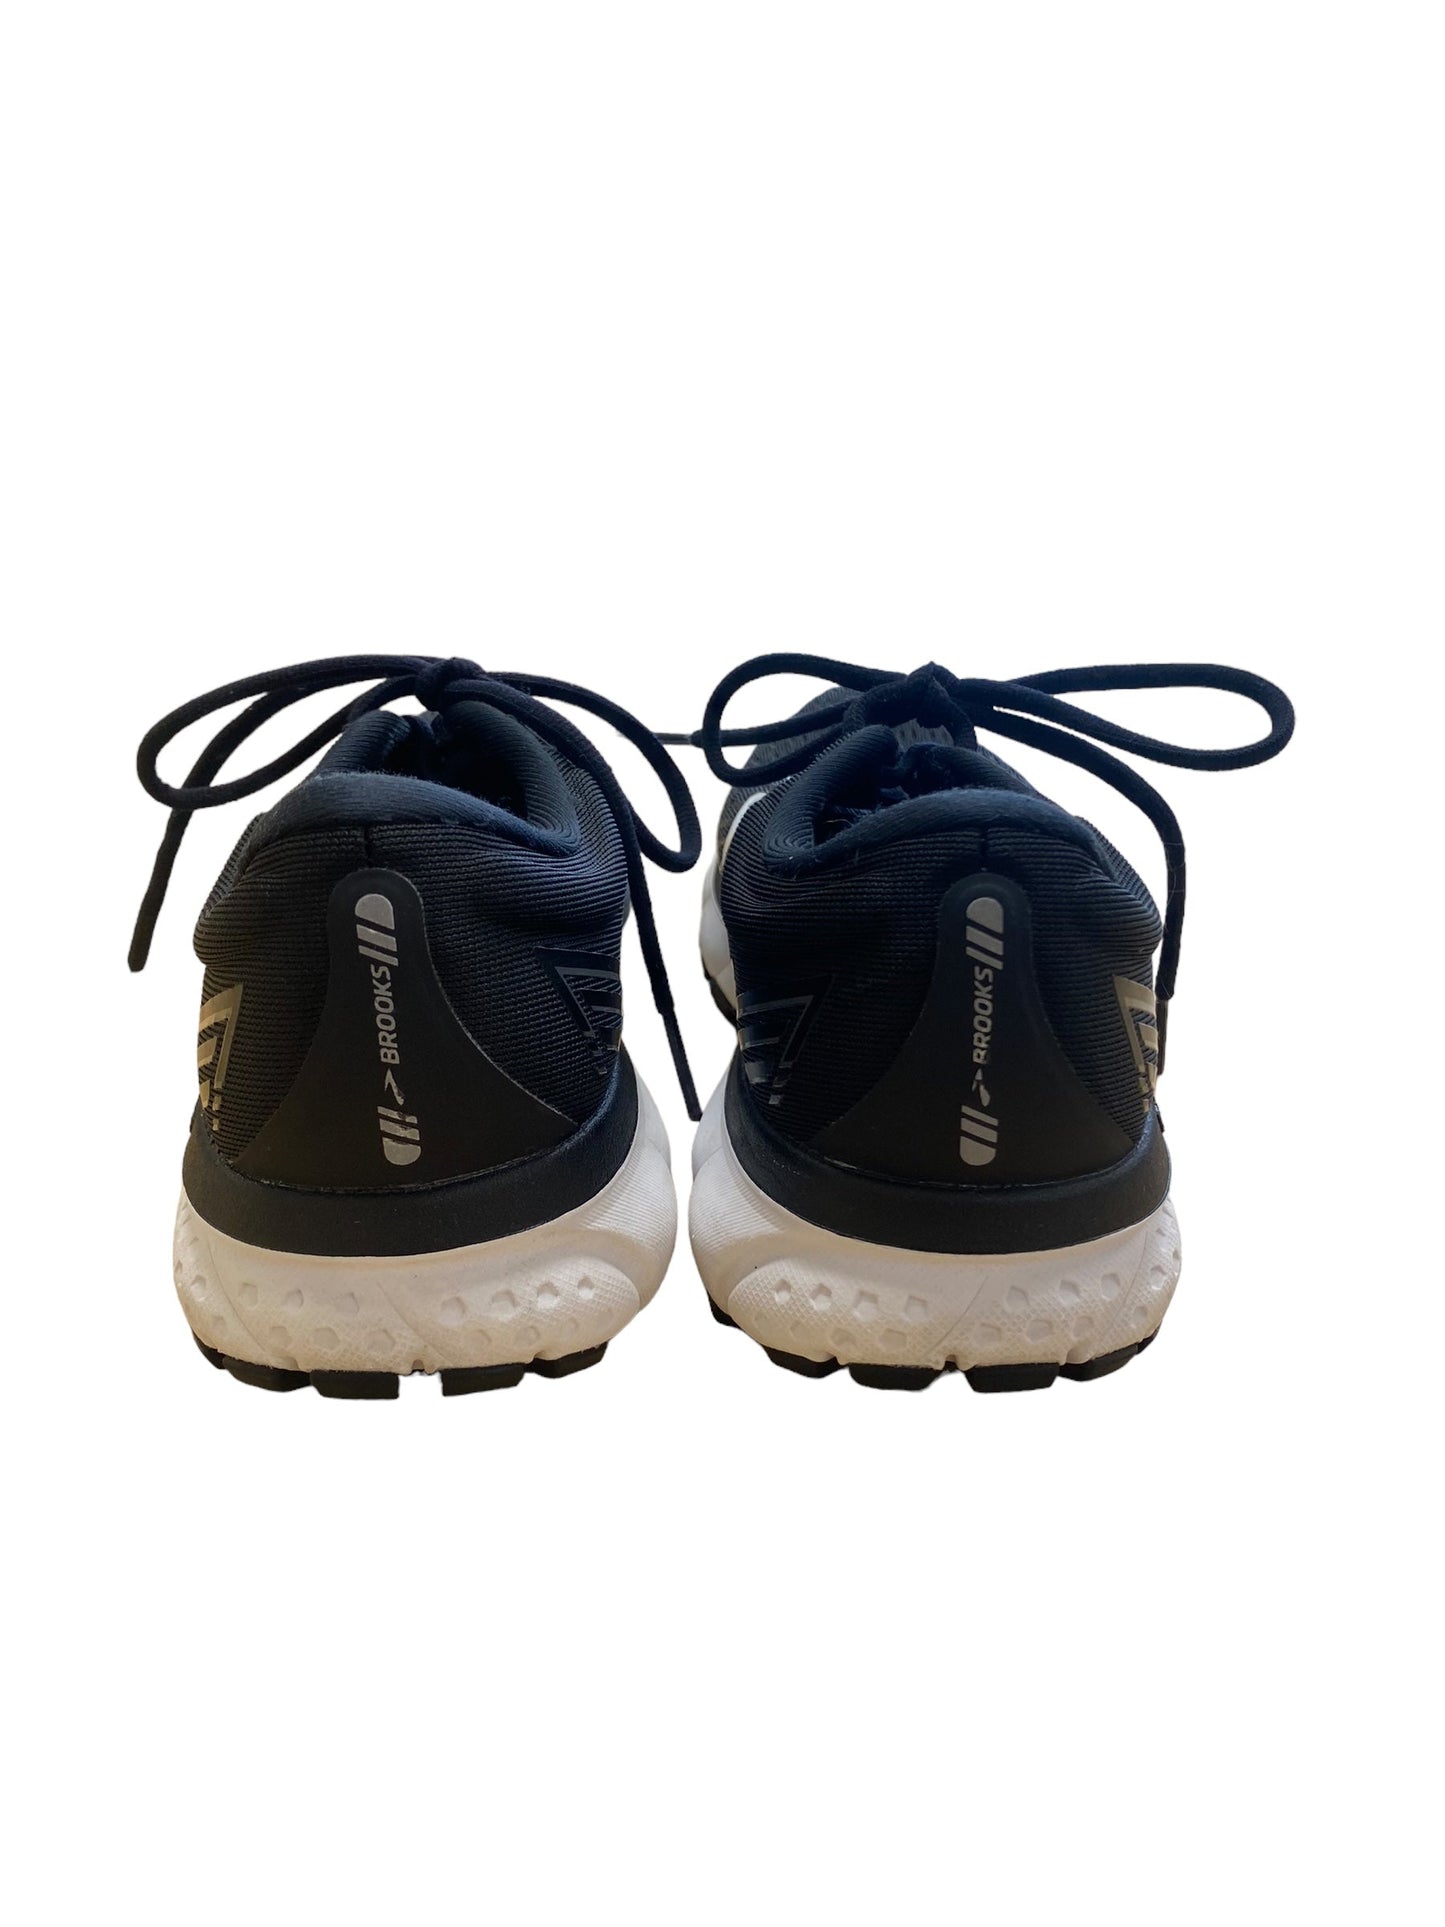 Grey Shoes Athletic Brooks, Size 8